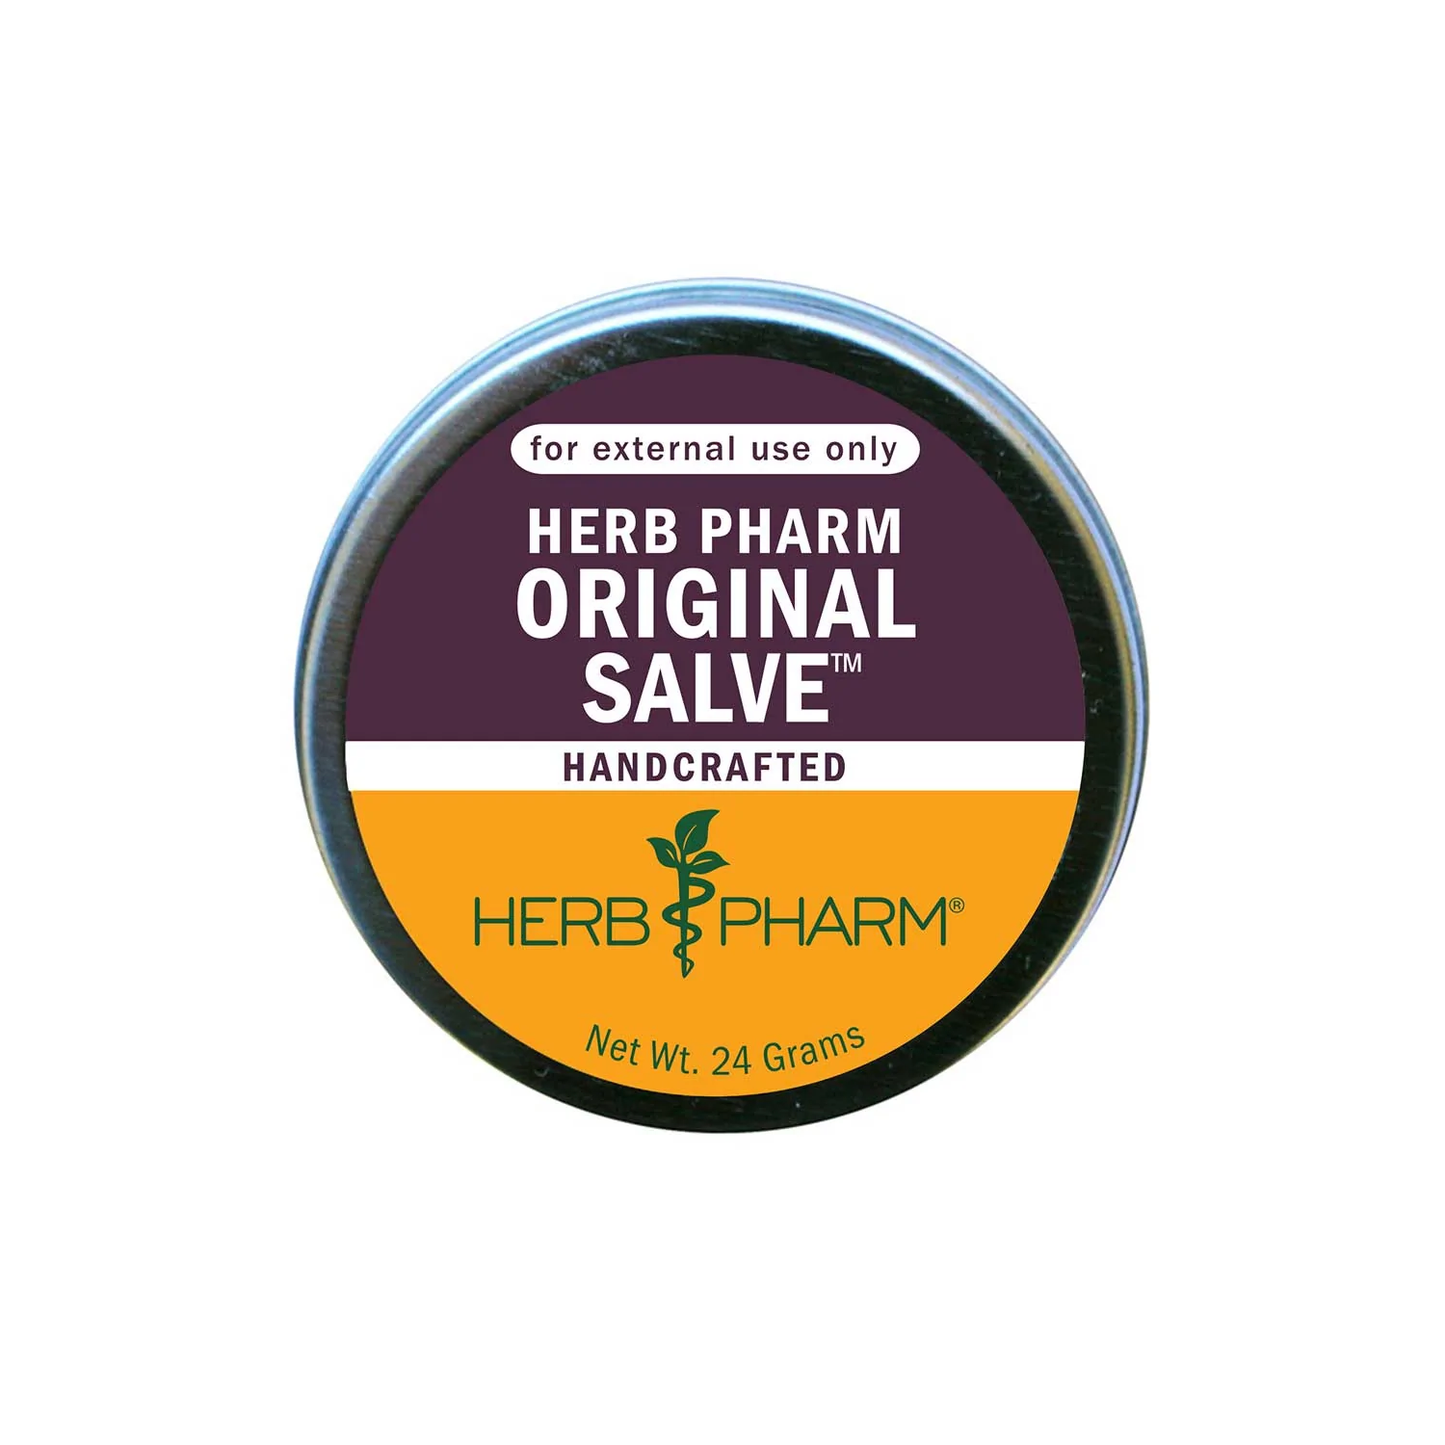 Herb Pharm Original Salve™